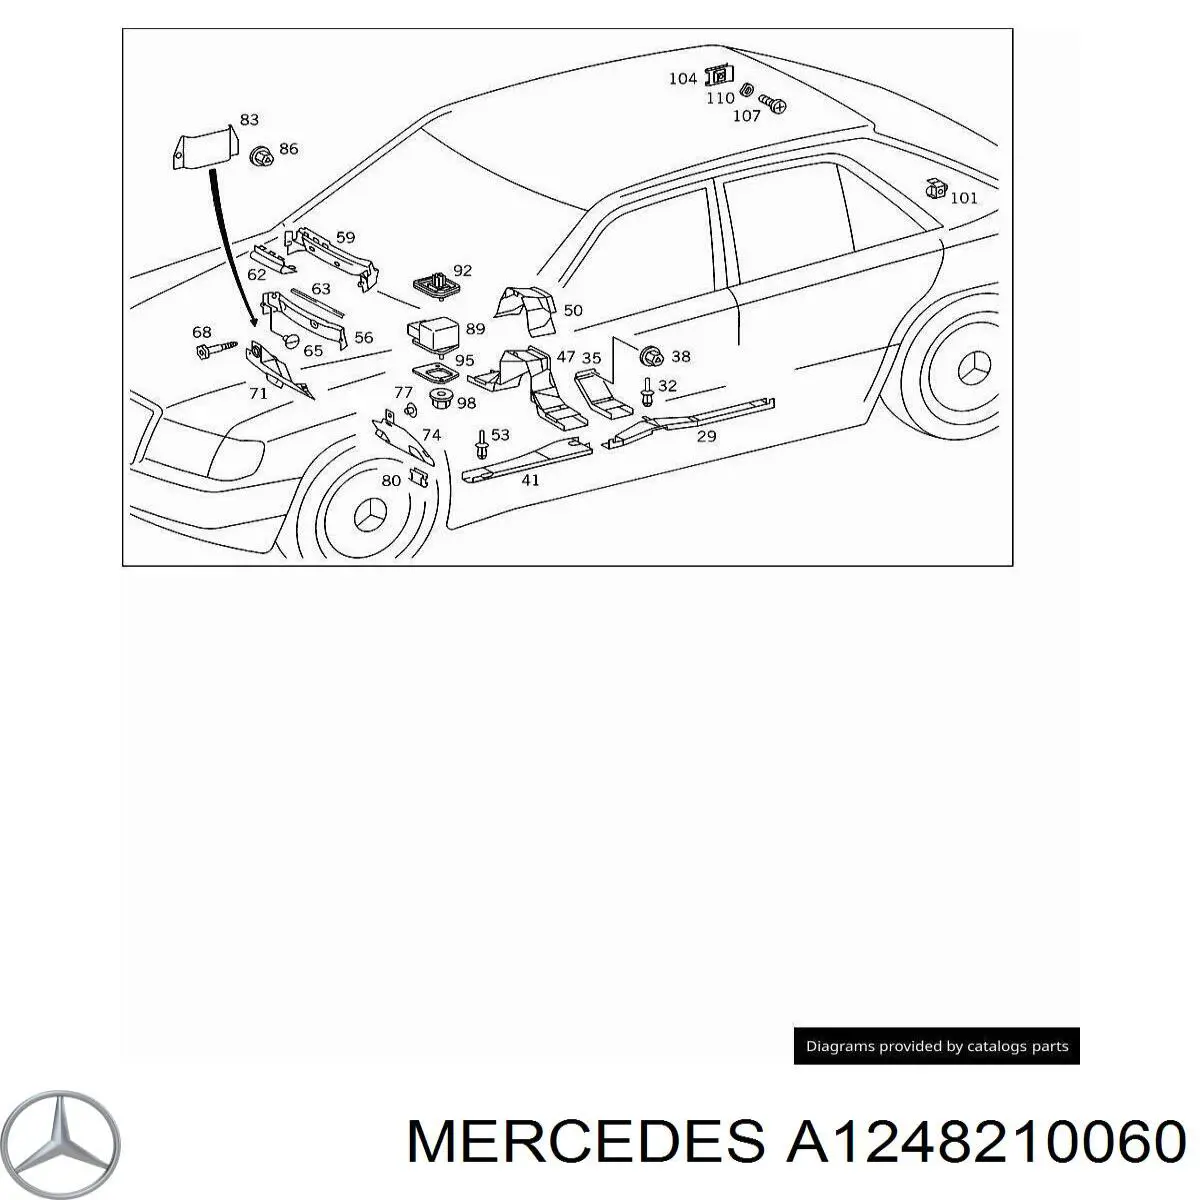 A1248210060 Mercedes